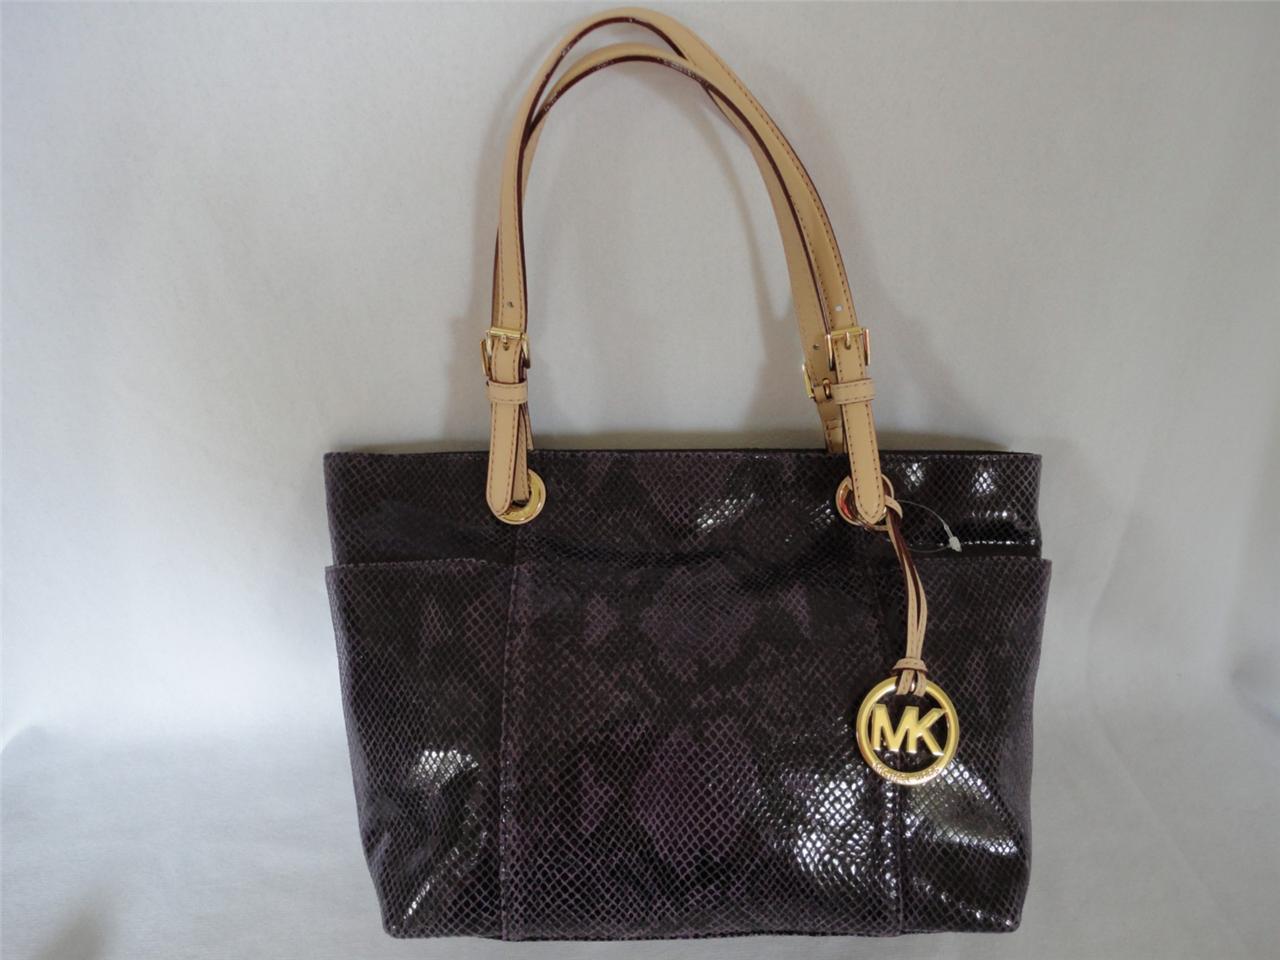 MICHAEL KORS - Purple Leather Top Zip Tote Handbag Bag - NEW WITH TAGS | eBay